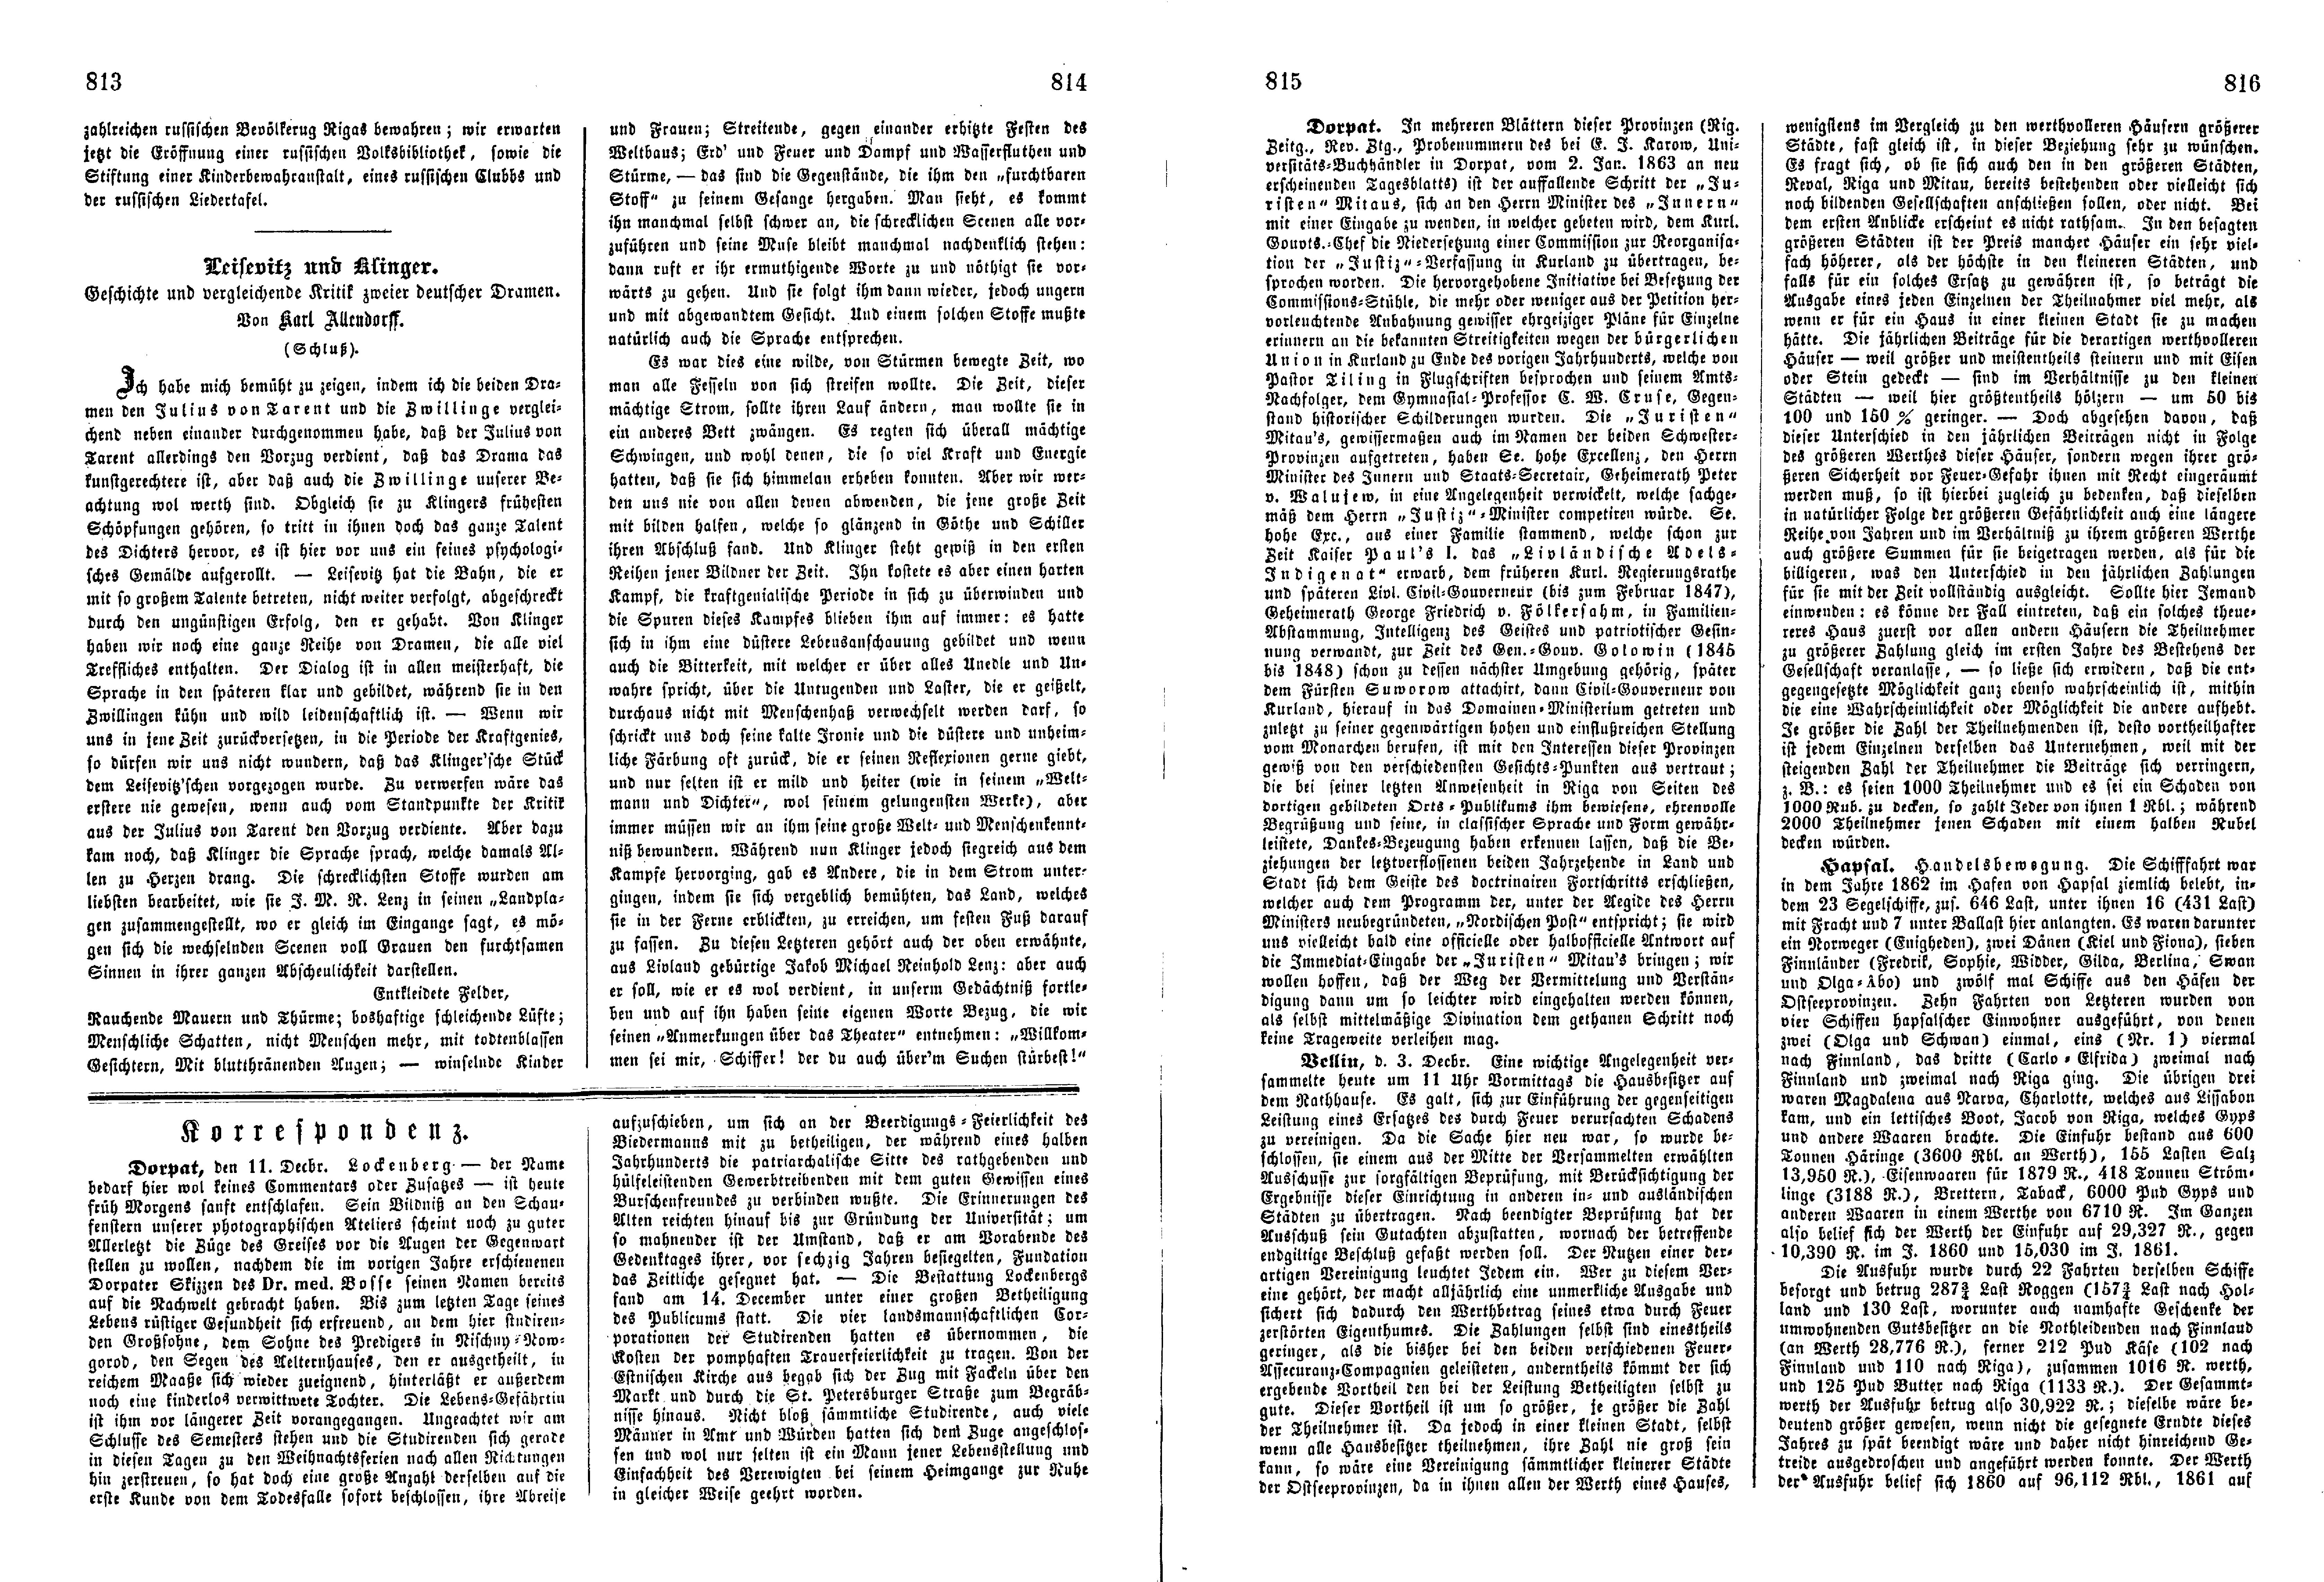 Das Inland [27] (1862) | 208. (813-816) Main body of text